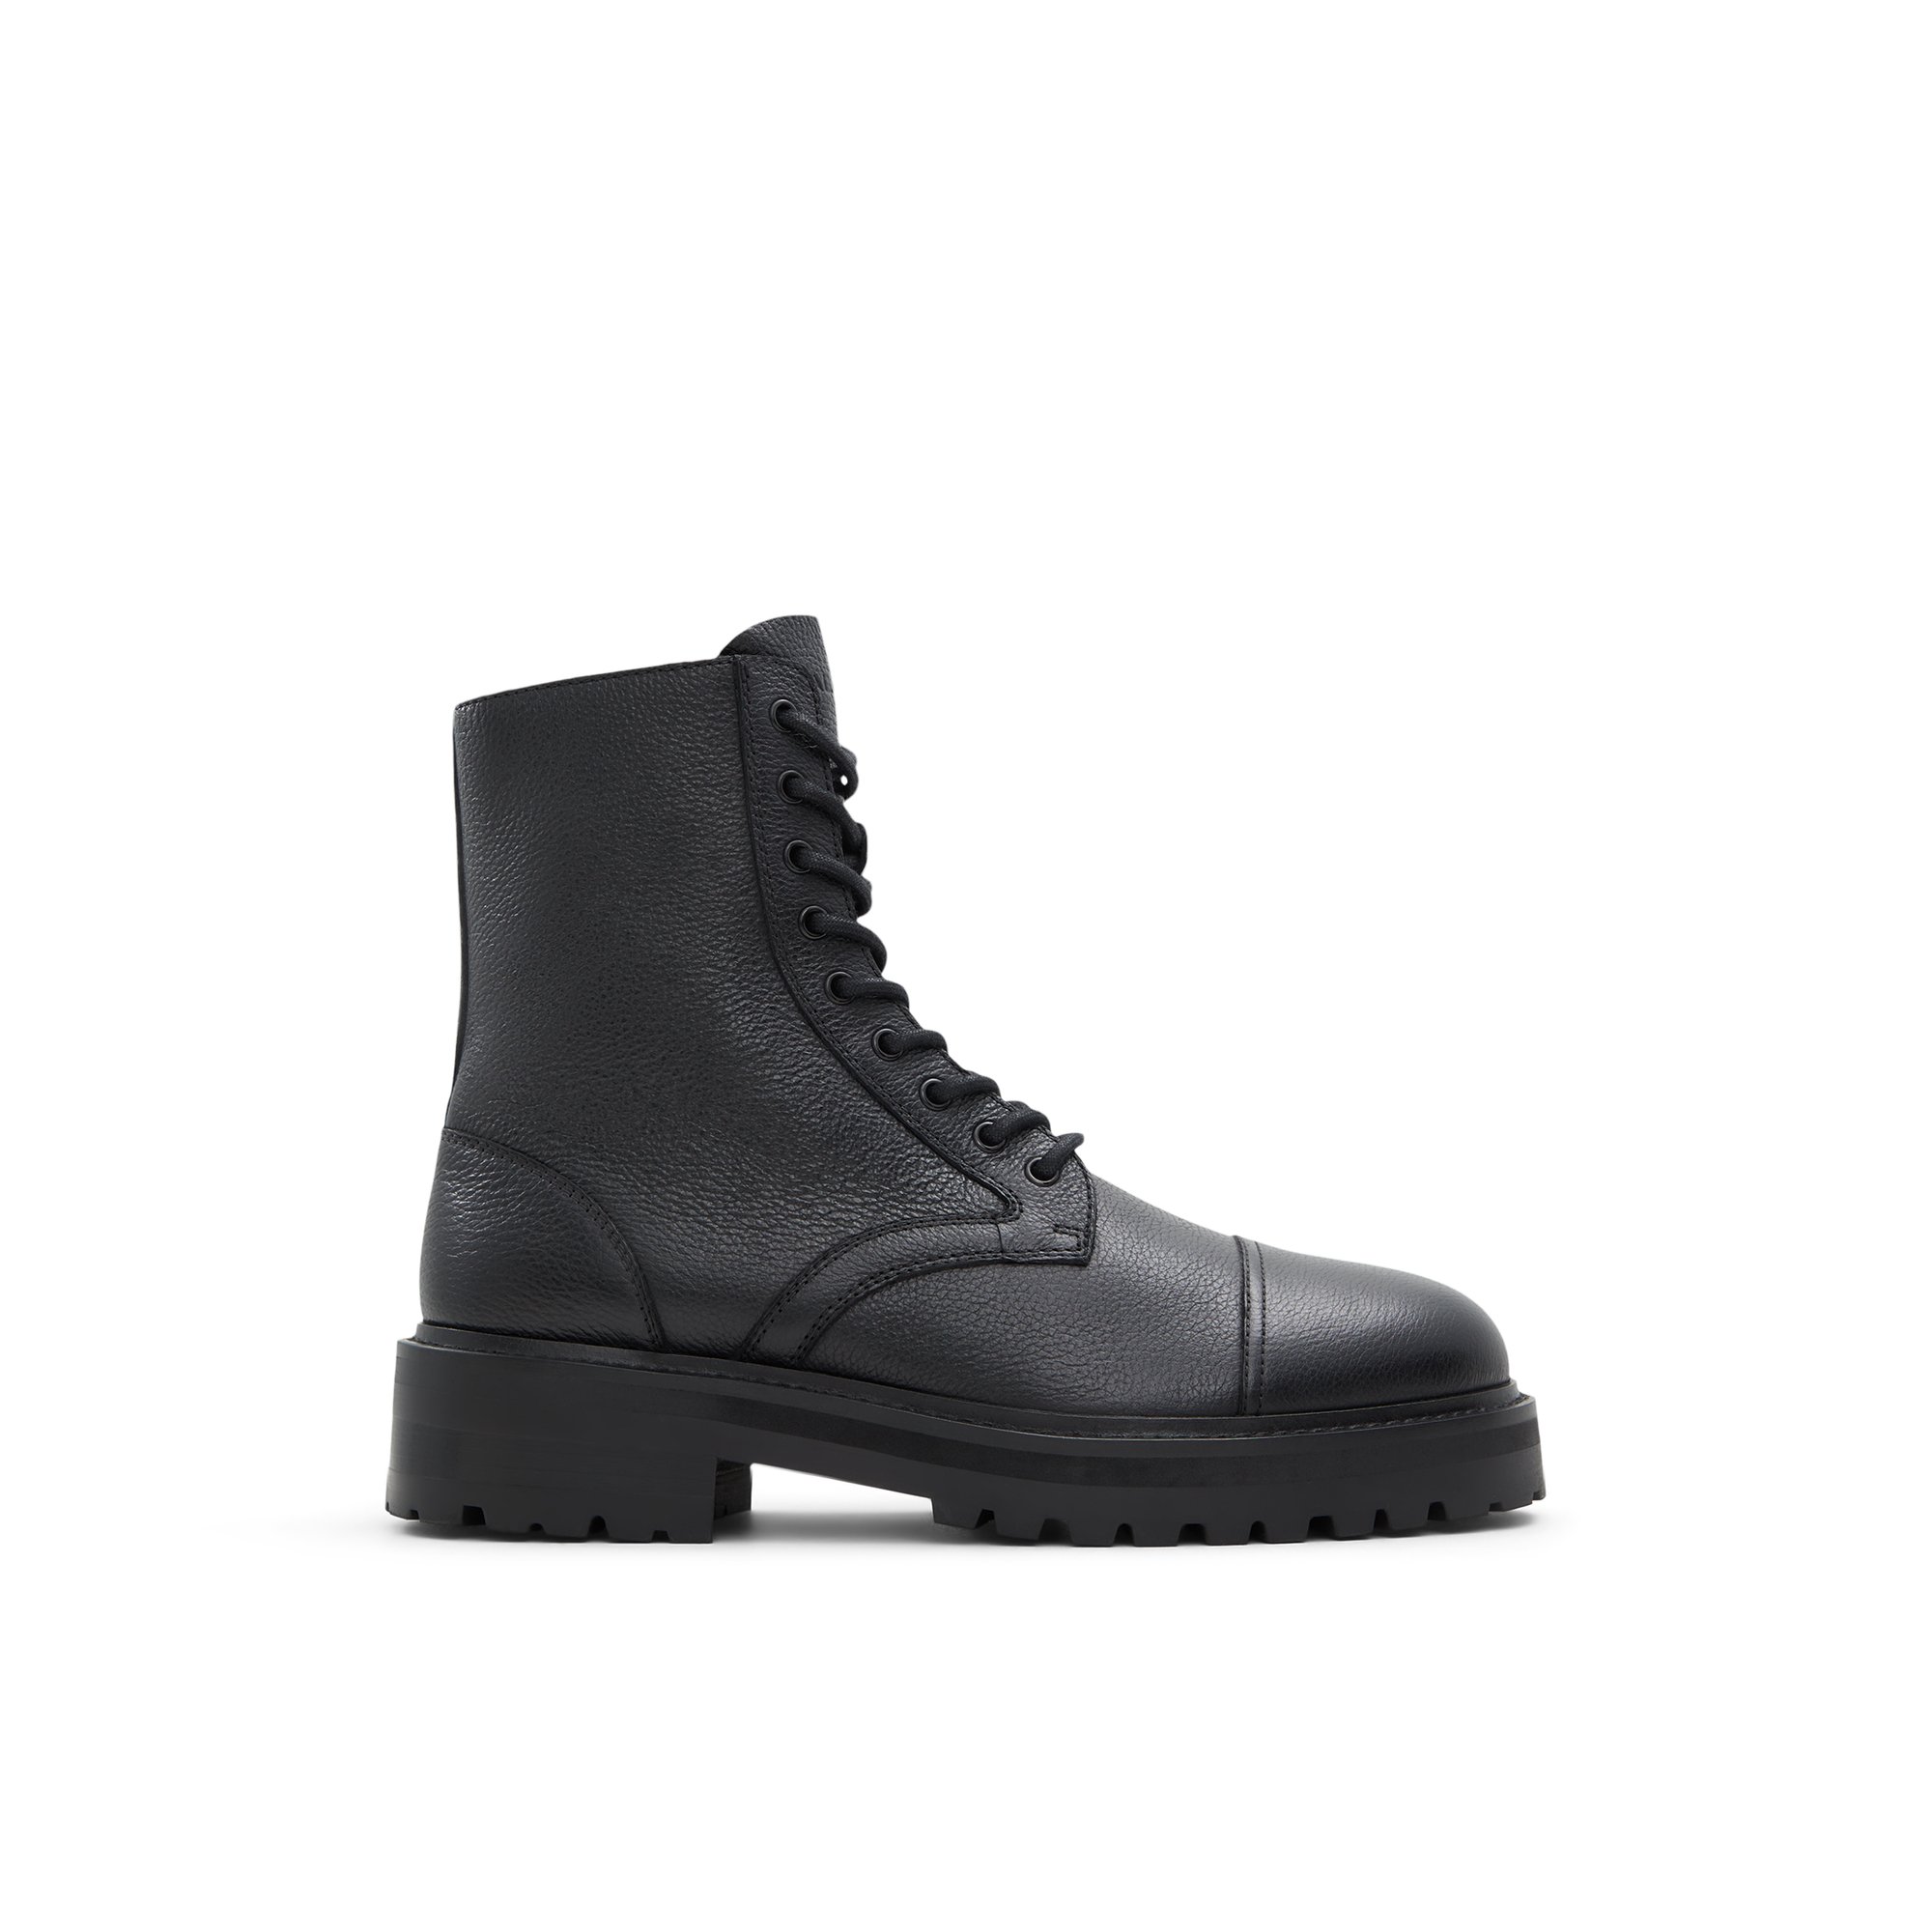 ALDO Northfield - Men's Lace-up Boot - Black